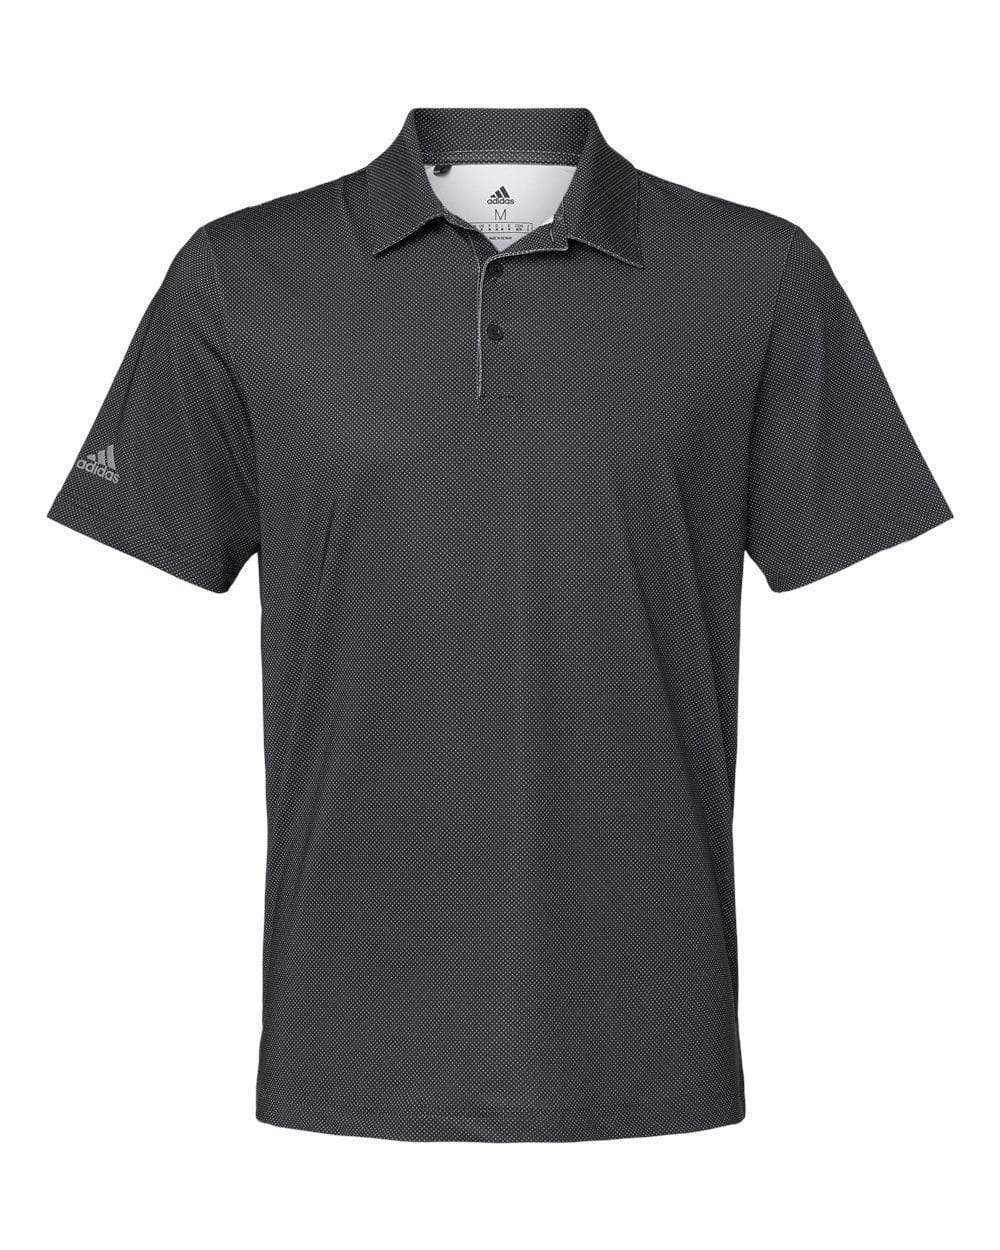 Adidas Polos S / Black/White/Grey Three adidas - Men's Diamond Dot Print Sport Shirt